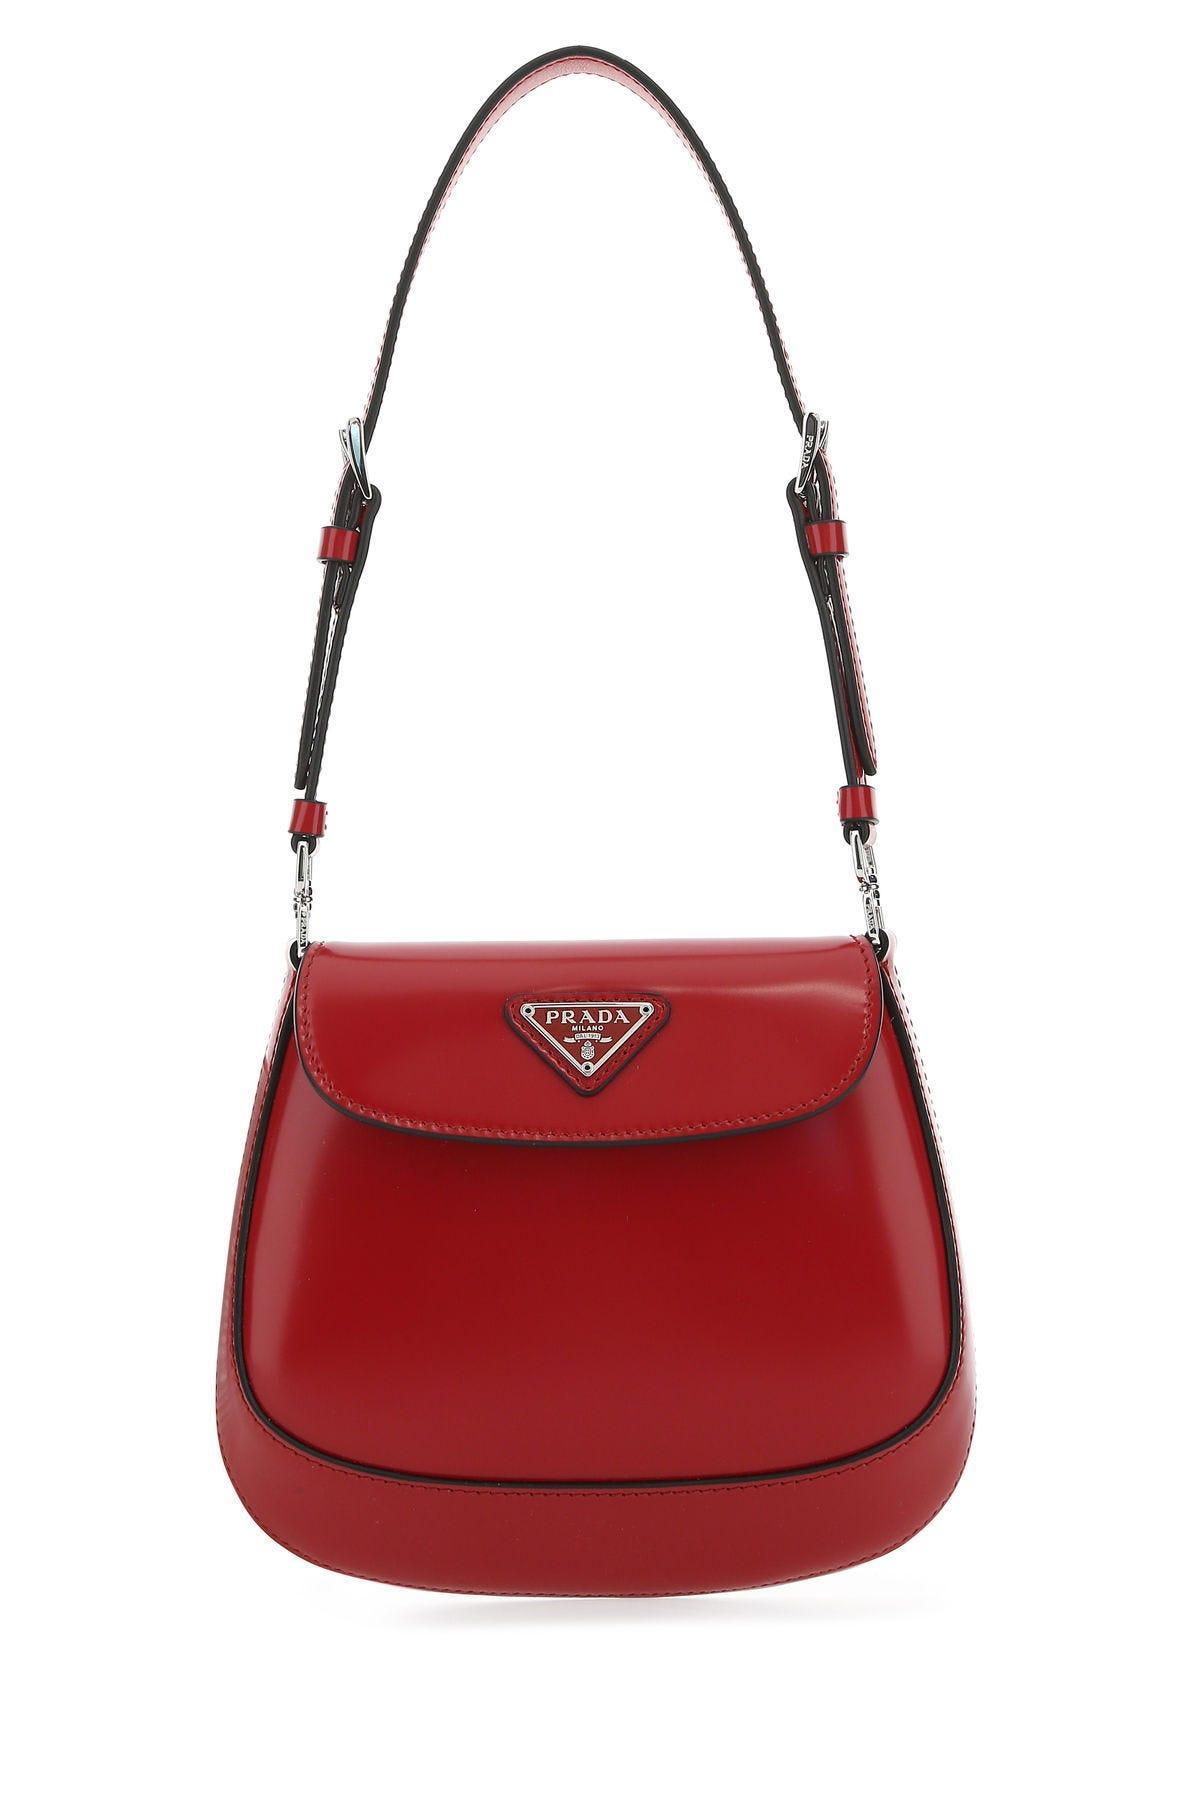 Prada Leather Shoulder Bag - Red | Editorialist